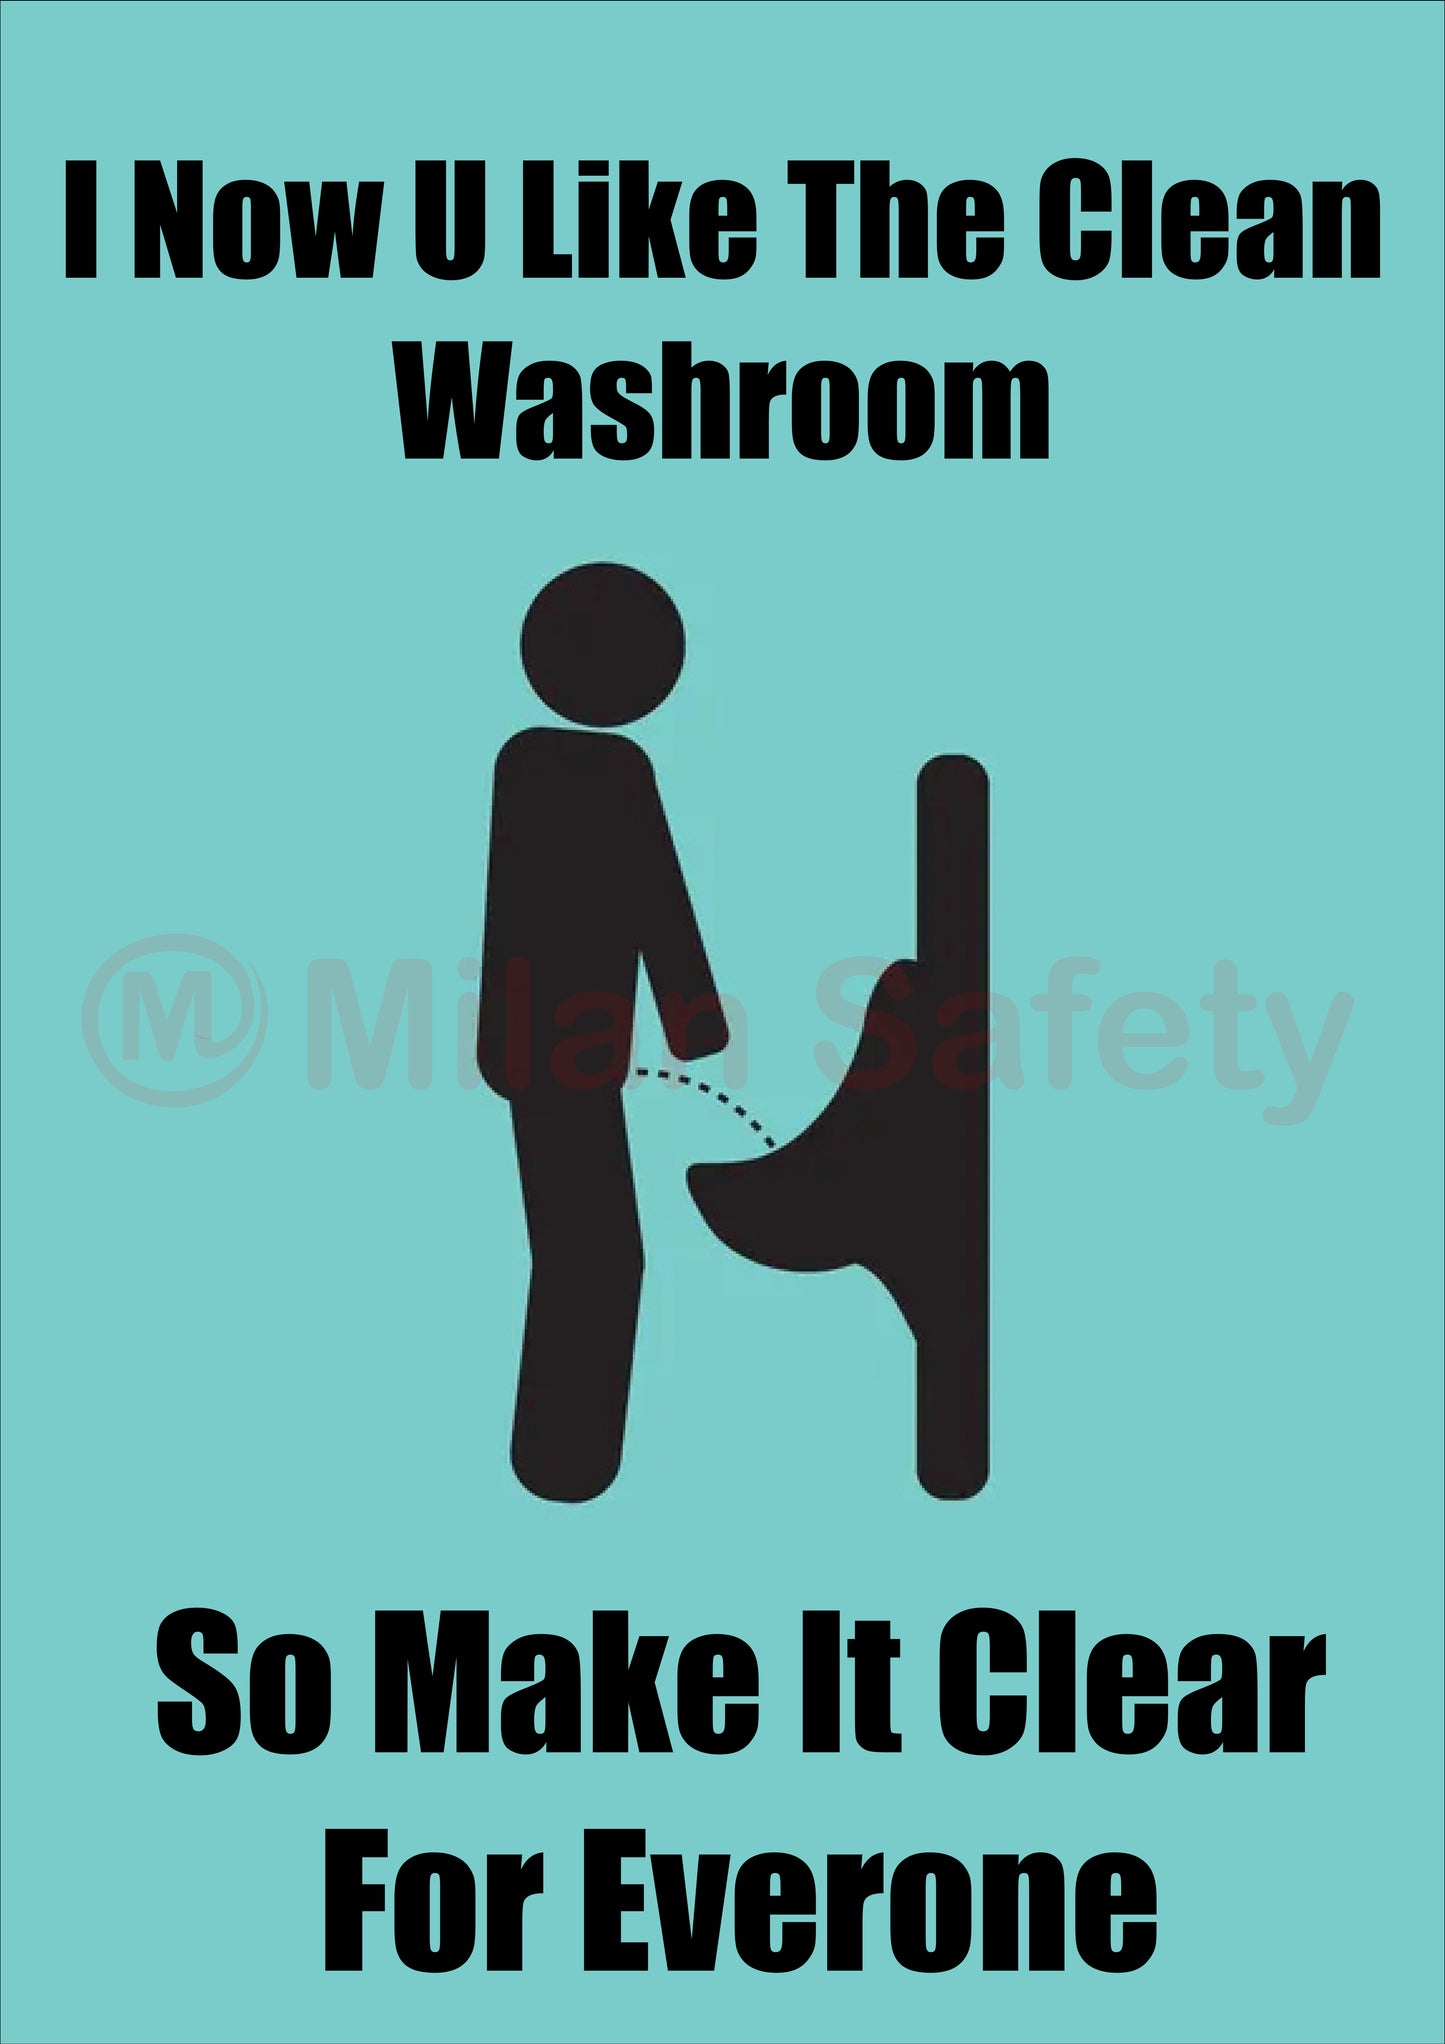 Clean washroom signage